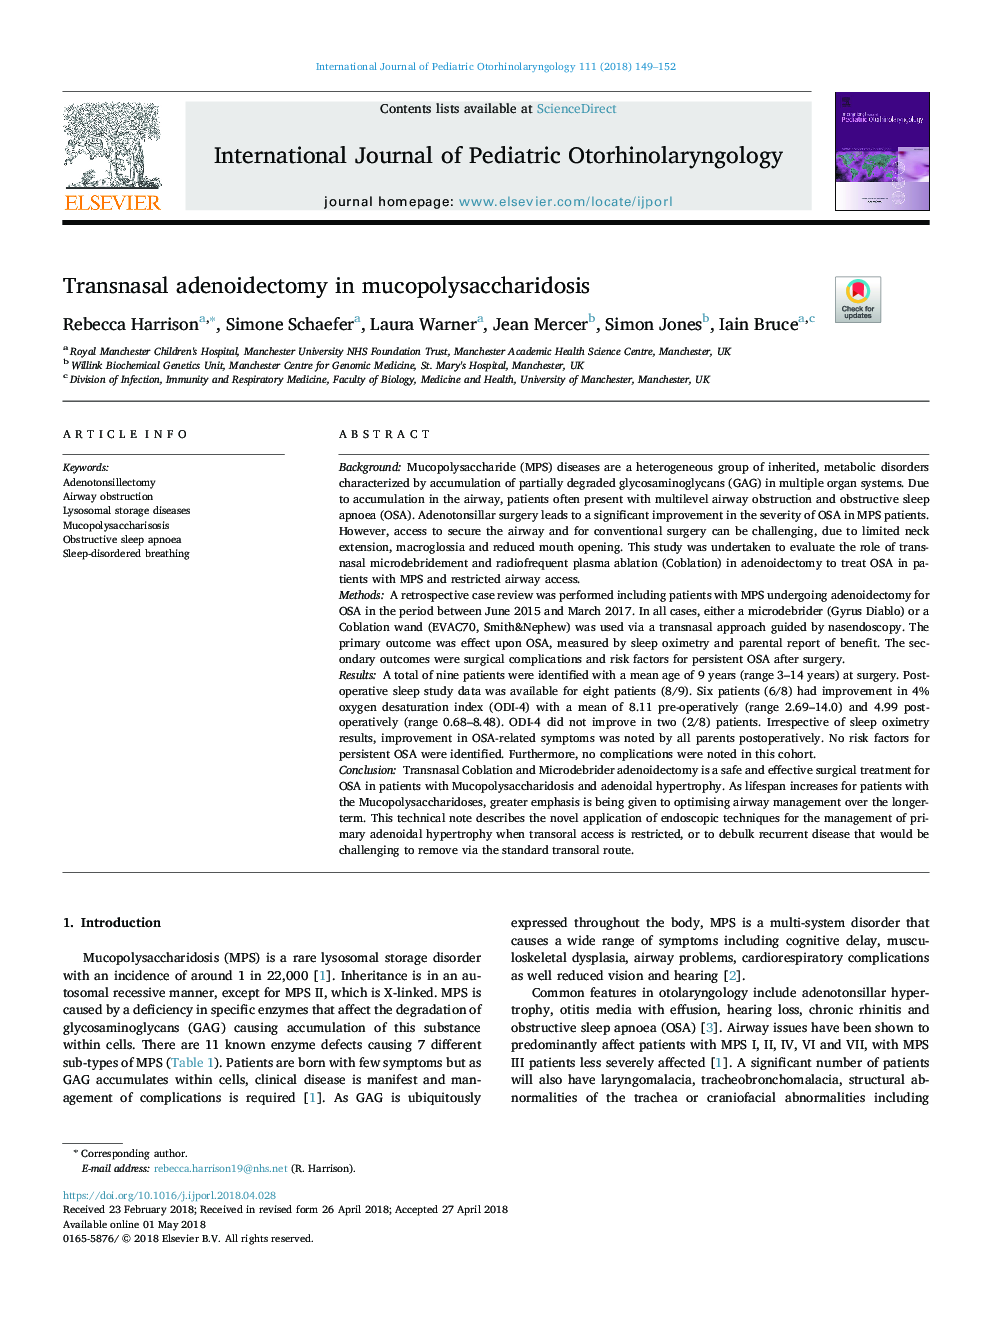 Transnasal adenoidectomy in mucopolysaccharidosis